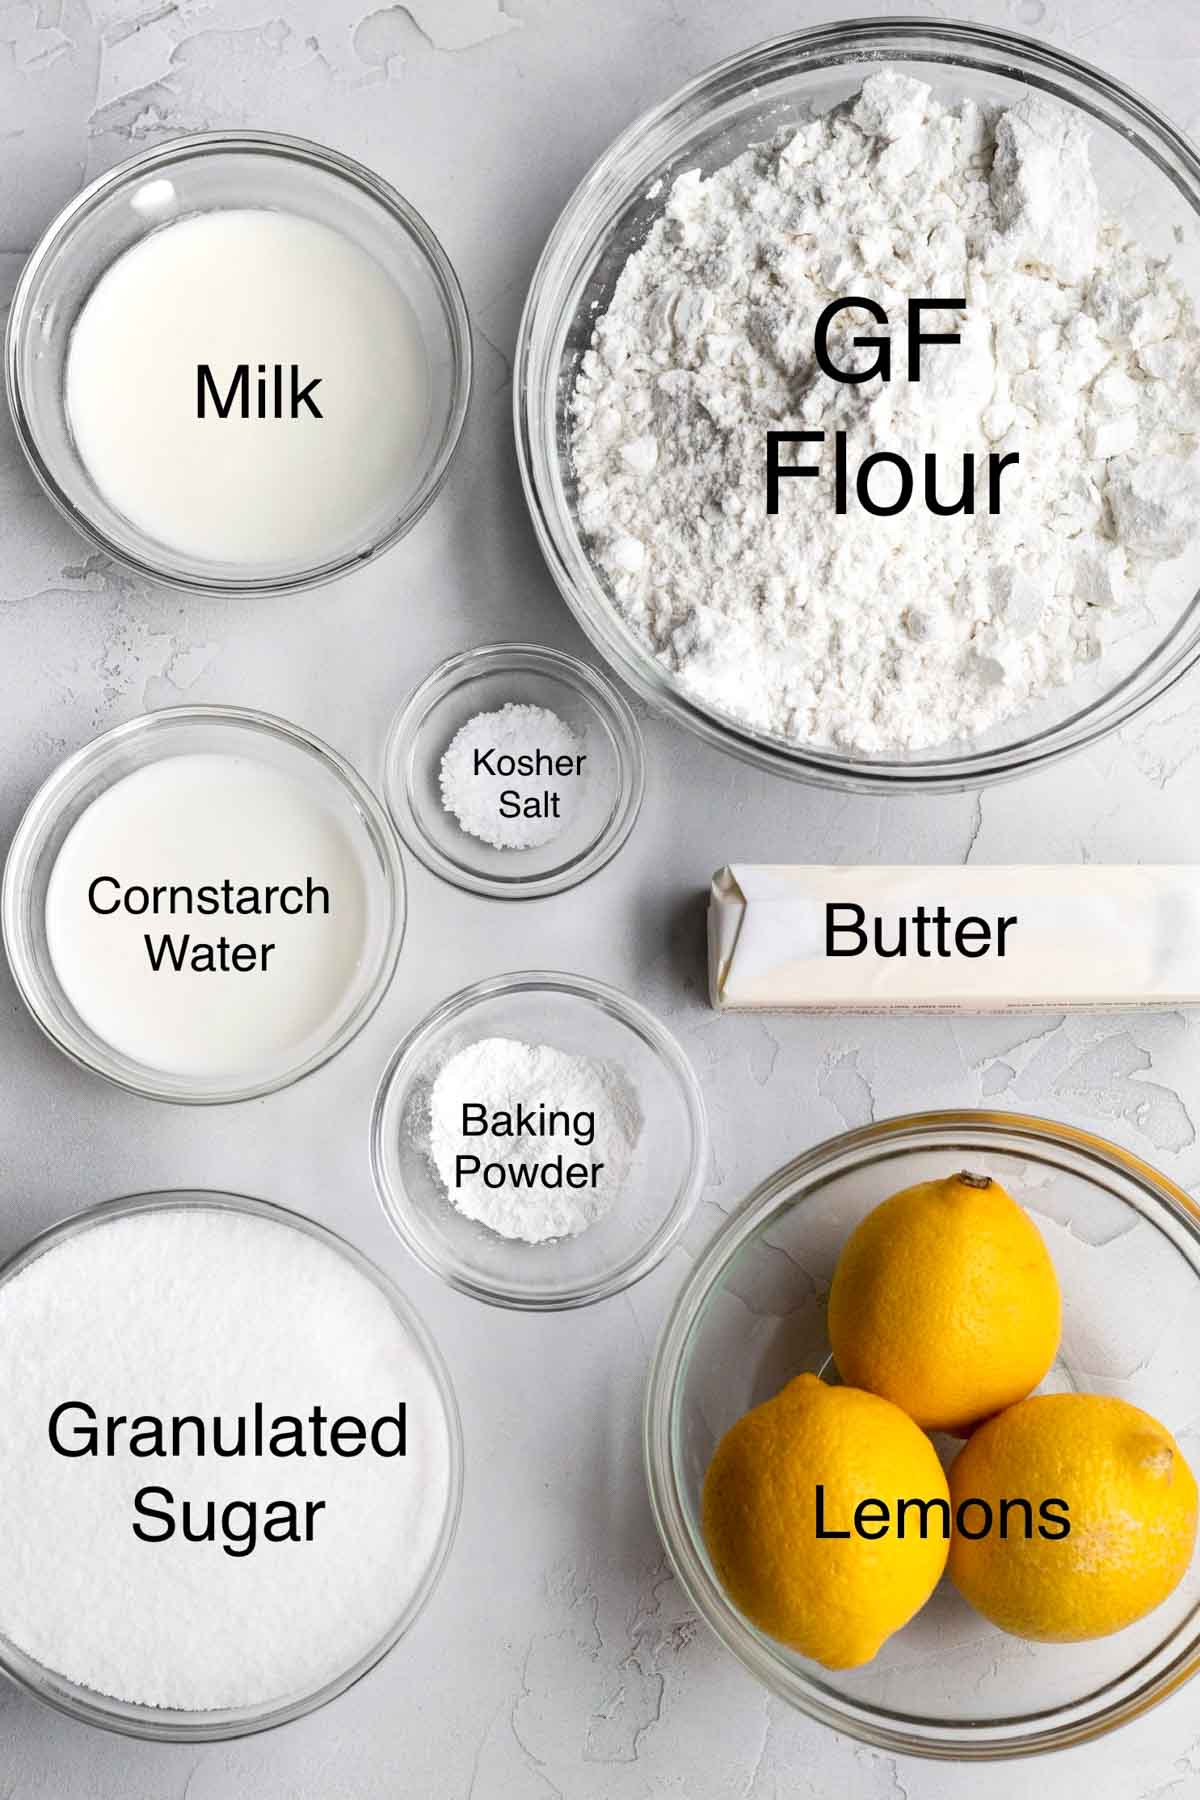 Milk, Gluten free flour, cornstarch water, kosher salt, butter, baking powder, granulated sugar and lemons in separate containers.